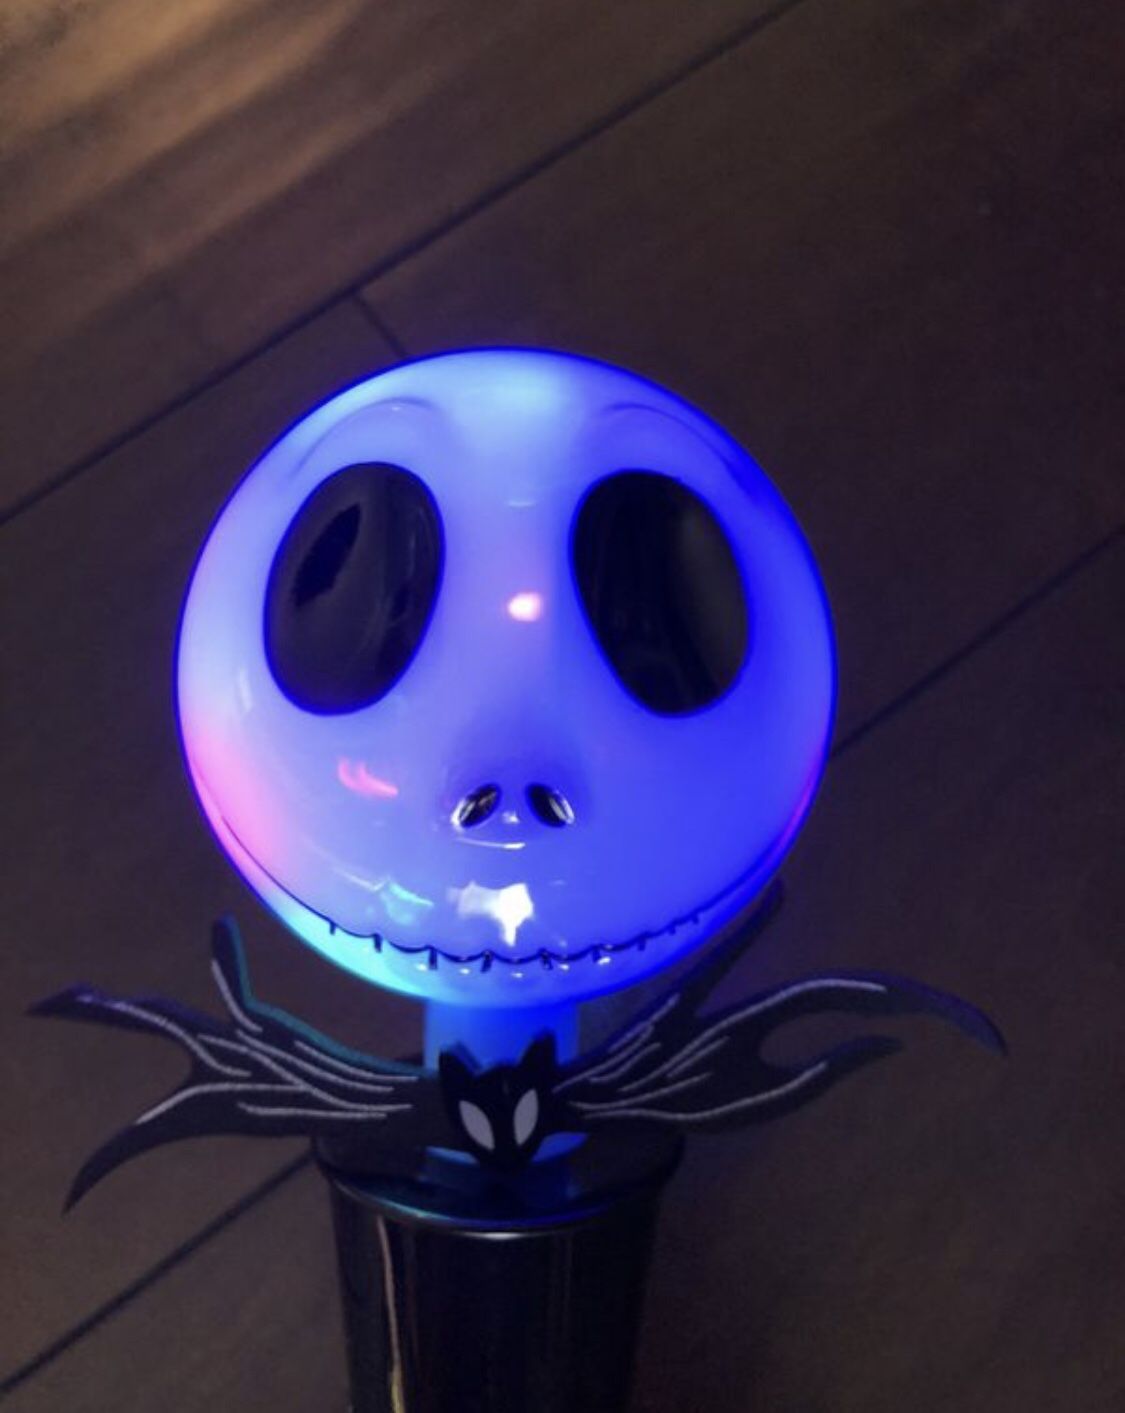 Disney, (Halloween) Nightmare Before Christmas Jack Skellington light spinner—Brand new